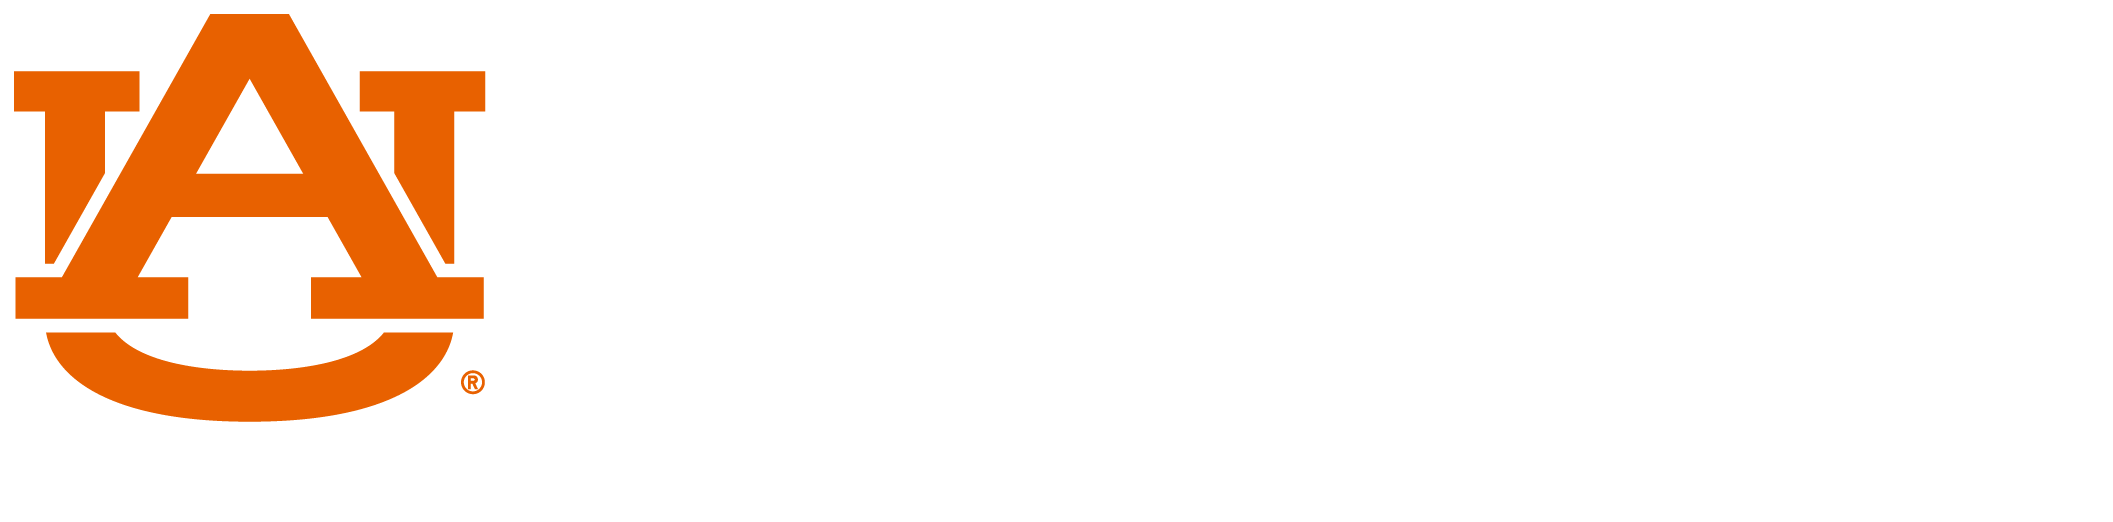 Auburn University Outreach interlocking AU logo - horizontal